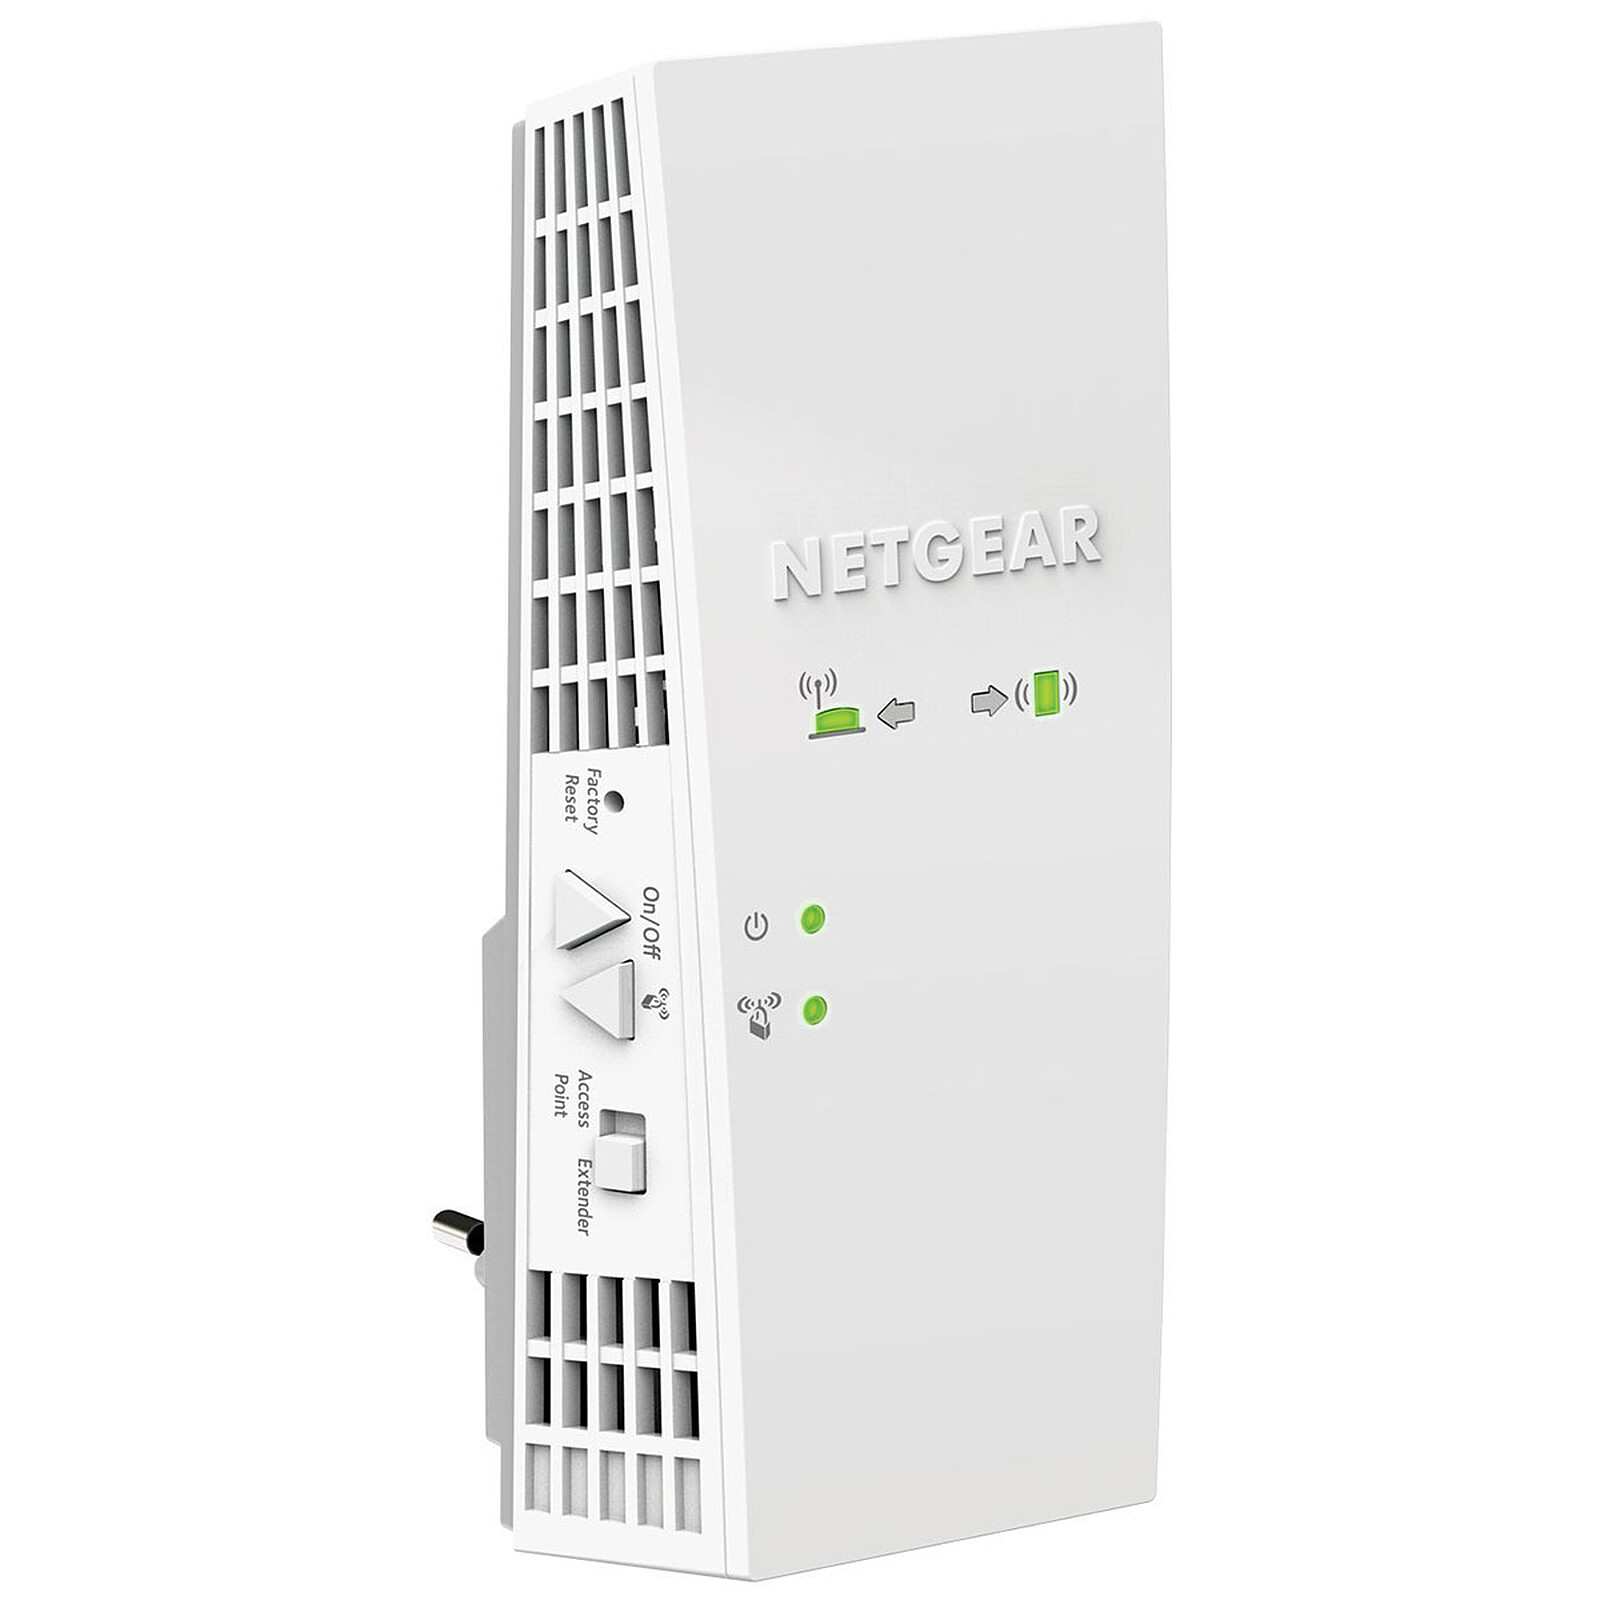 Netgear Répéteur WiFi-Mesh EAX12